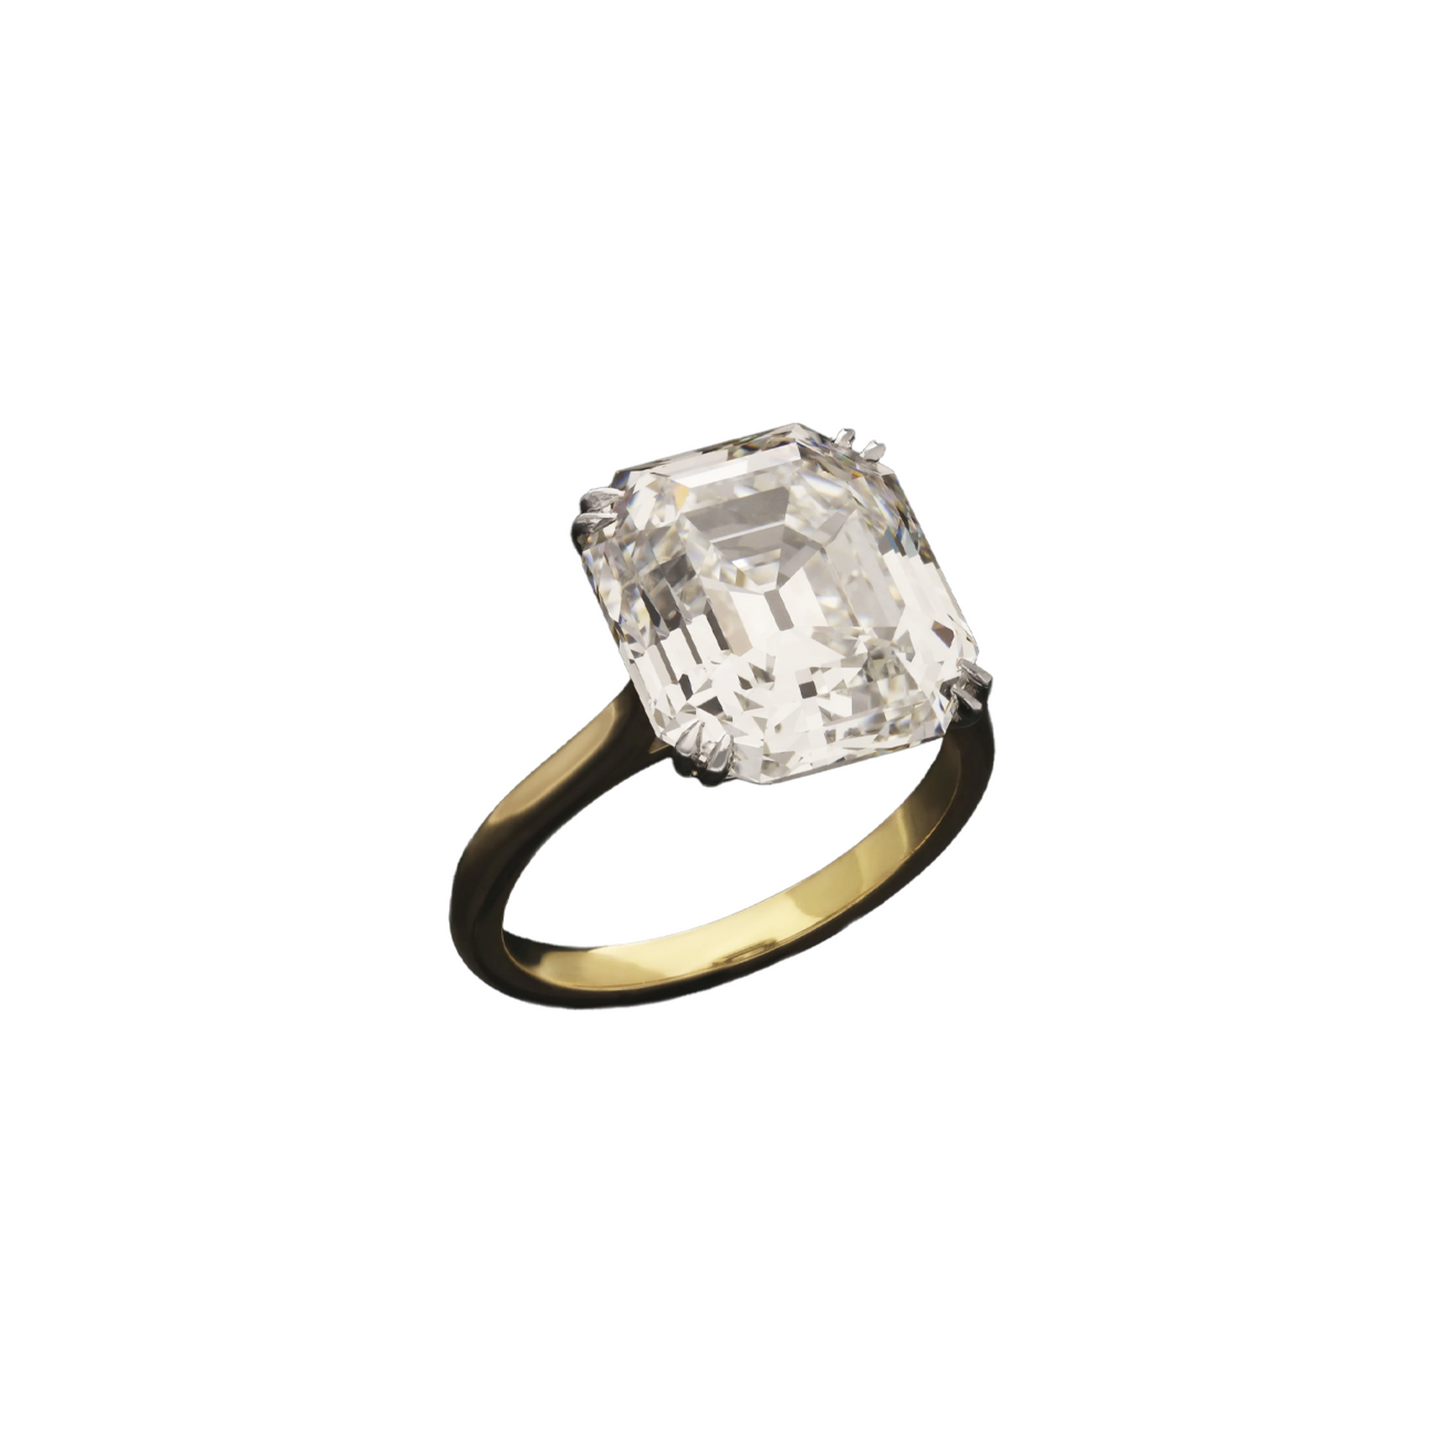 Hancocks Antique Diamond in Modern Platinum & 18KT Yellow Gold Ring front